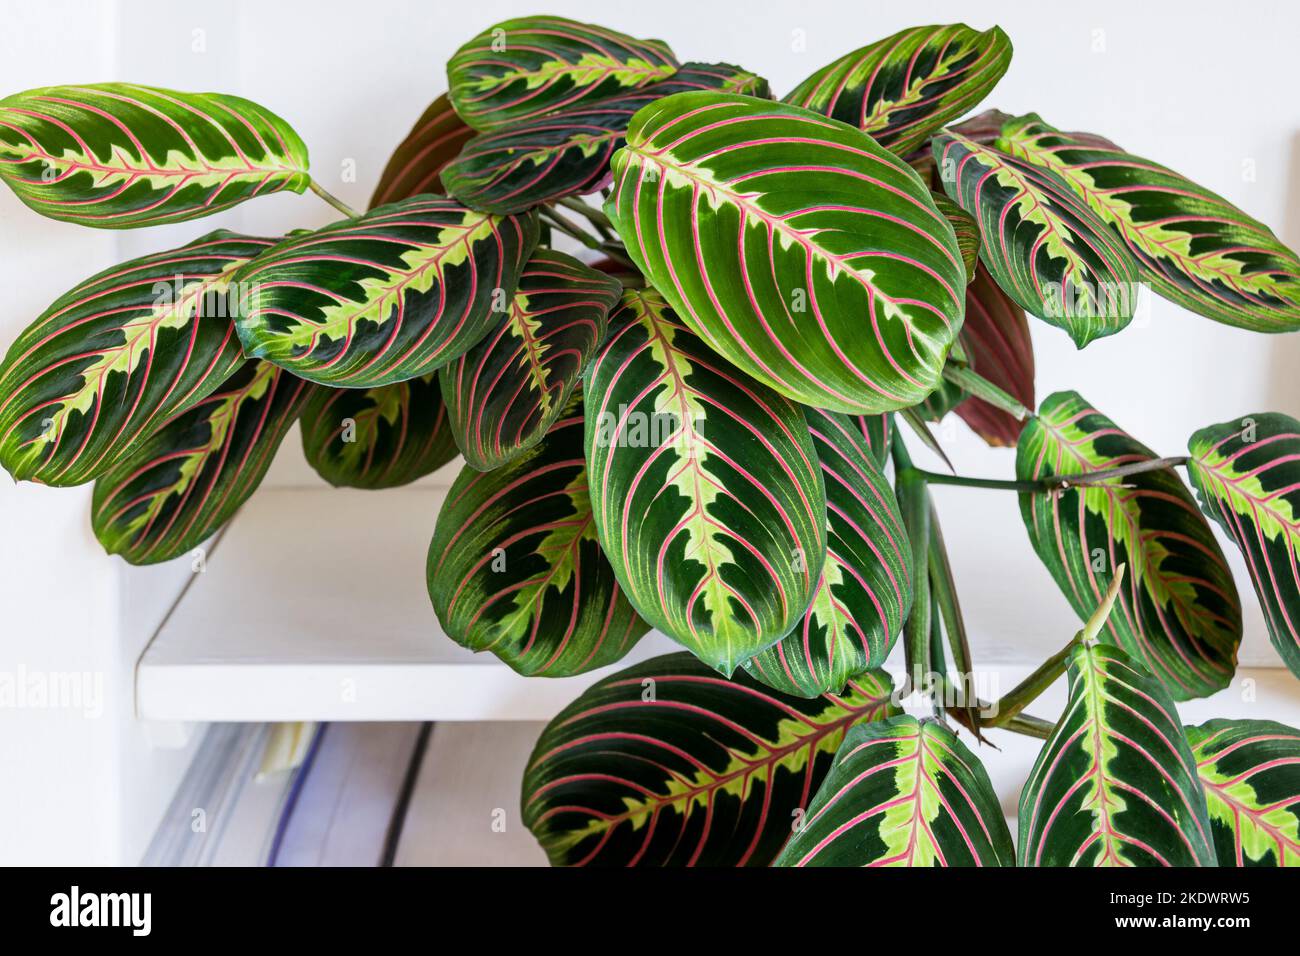 Maranta leuconeura var. erythroneura fascinator tricolor aka herringbone plant on a shelf in a modern apartment. Stock Photo